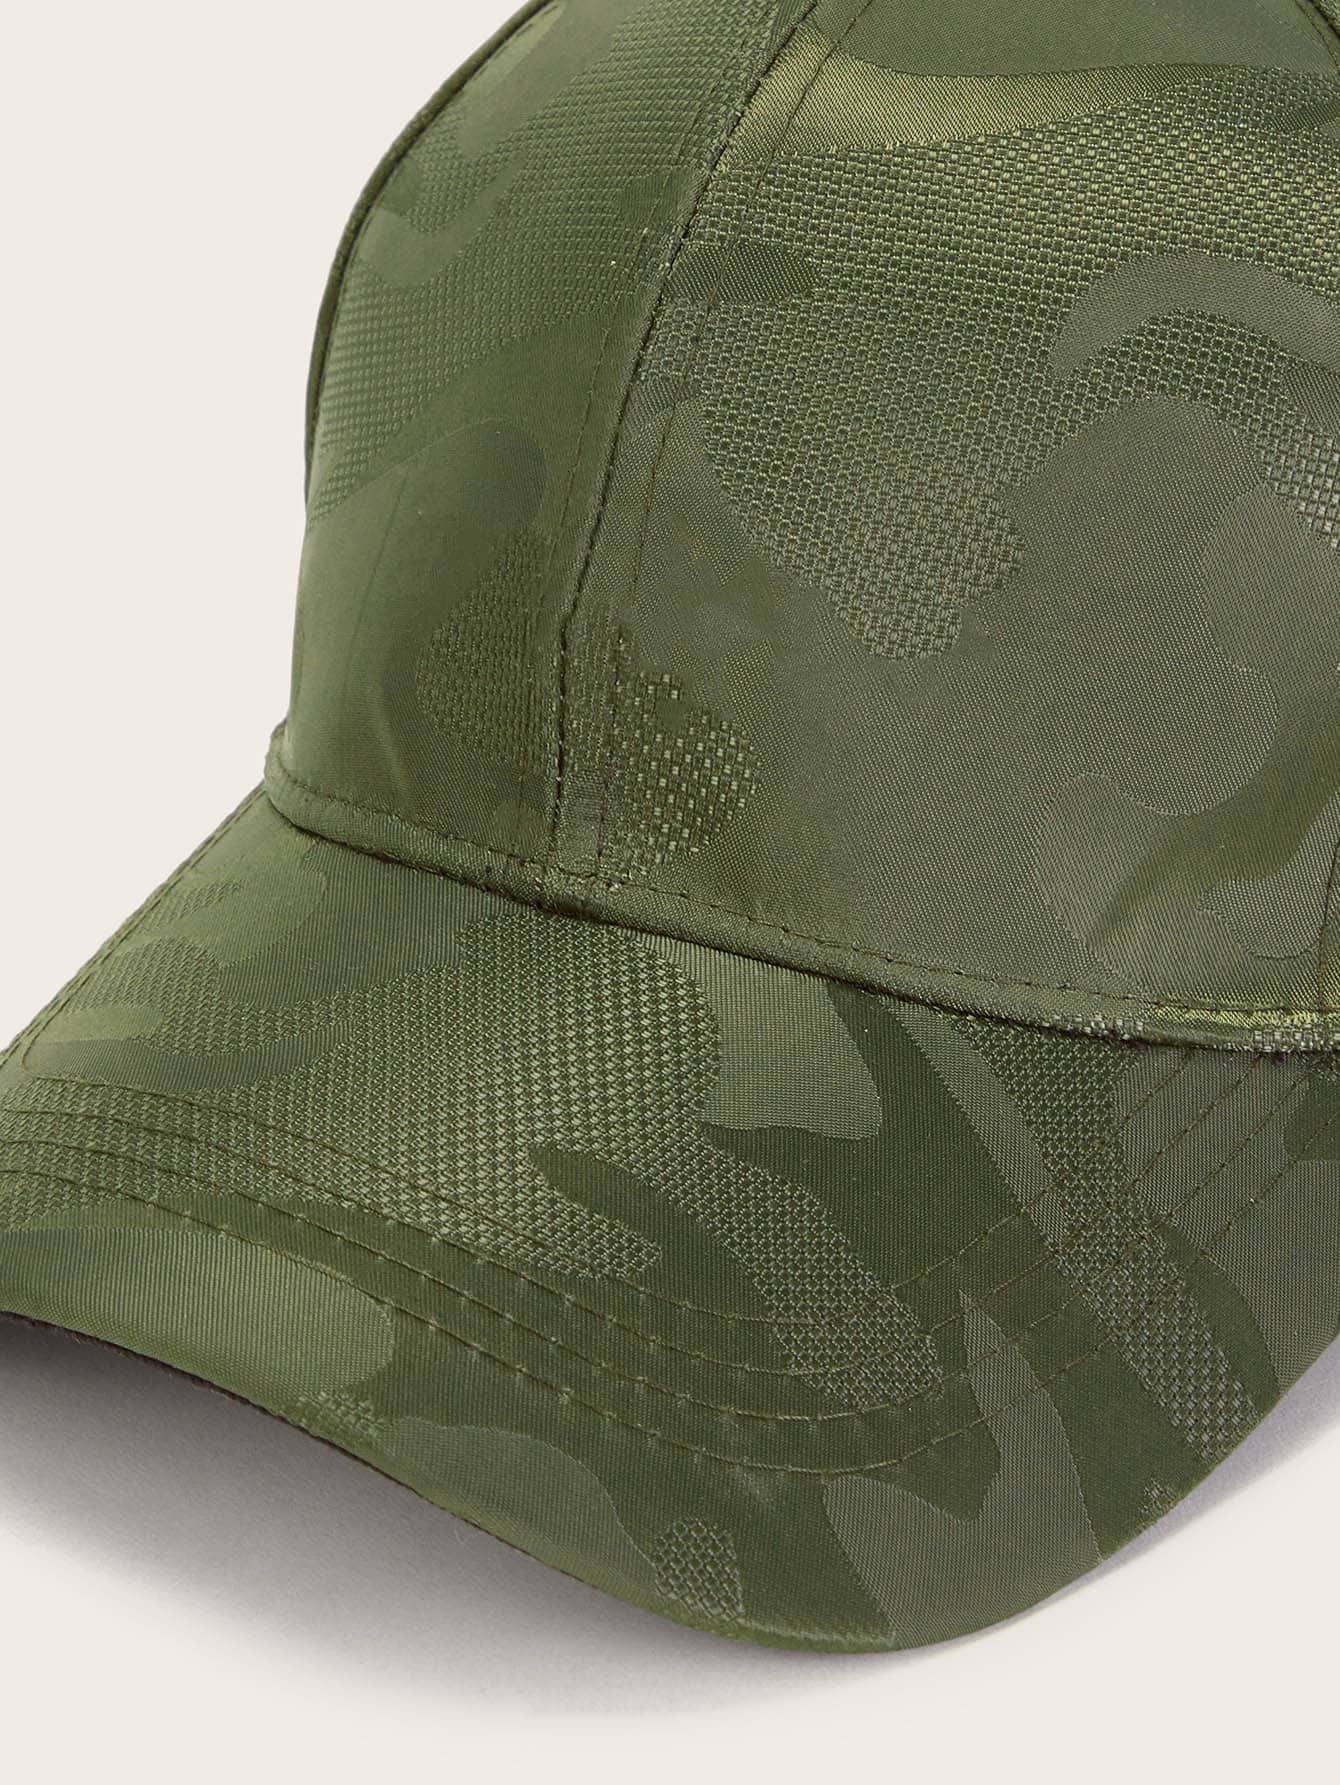 Army Green Camouflage Pattern Baseball Cap